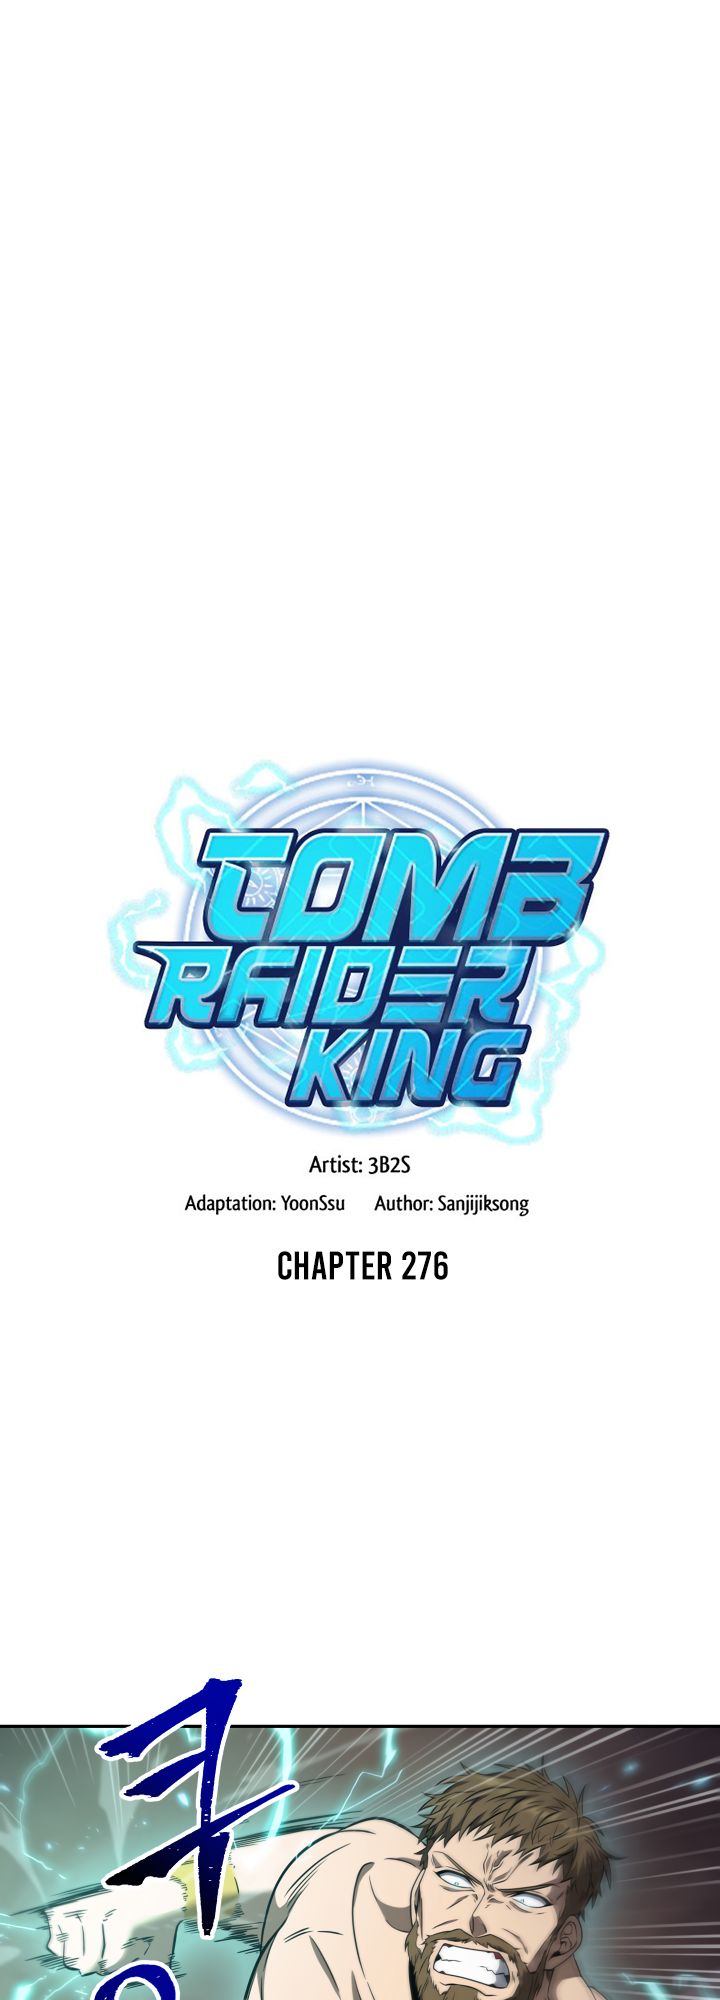 Tomb Raider King 276 1